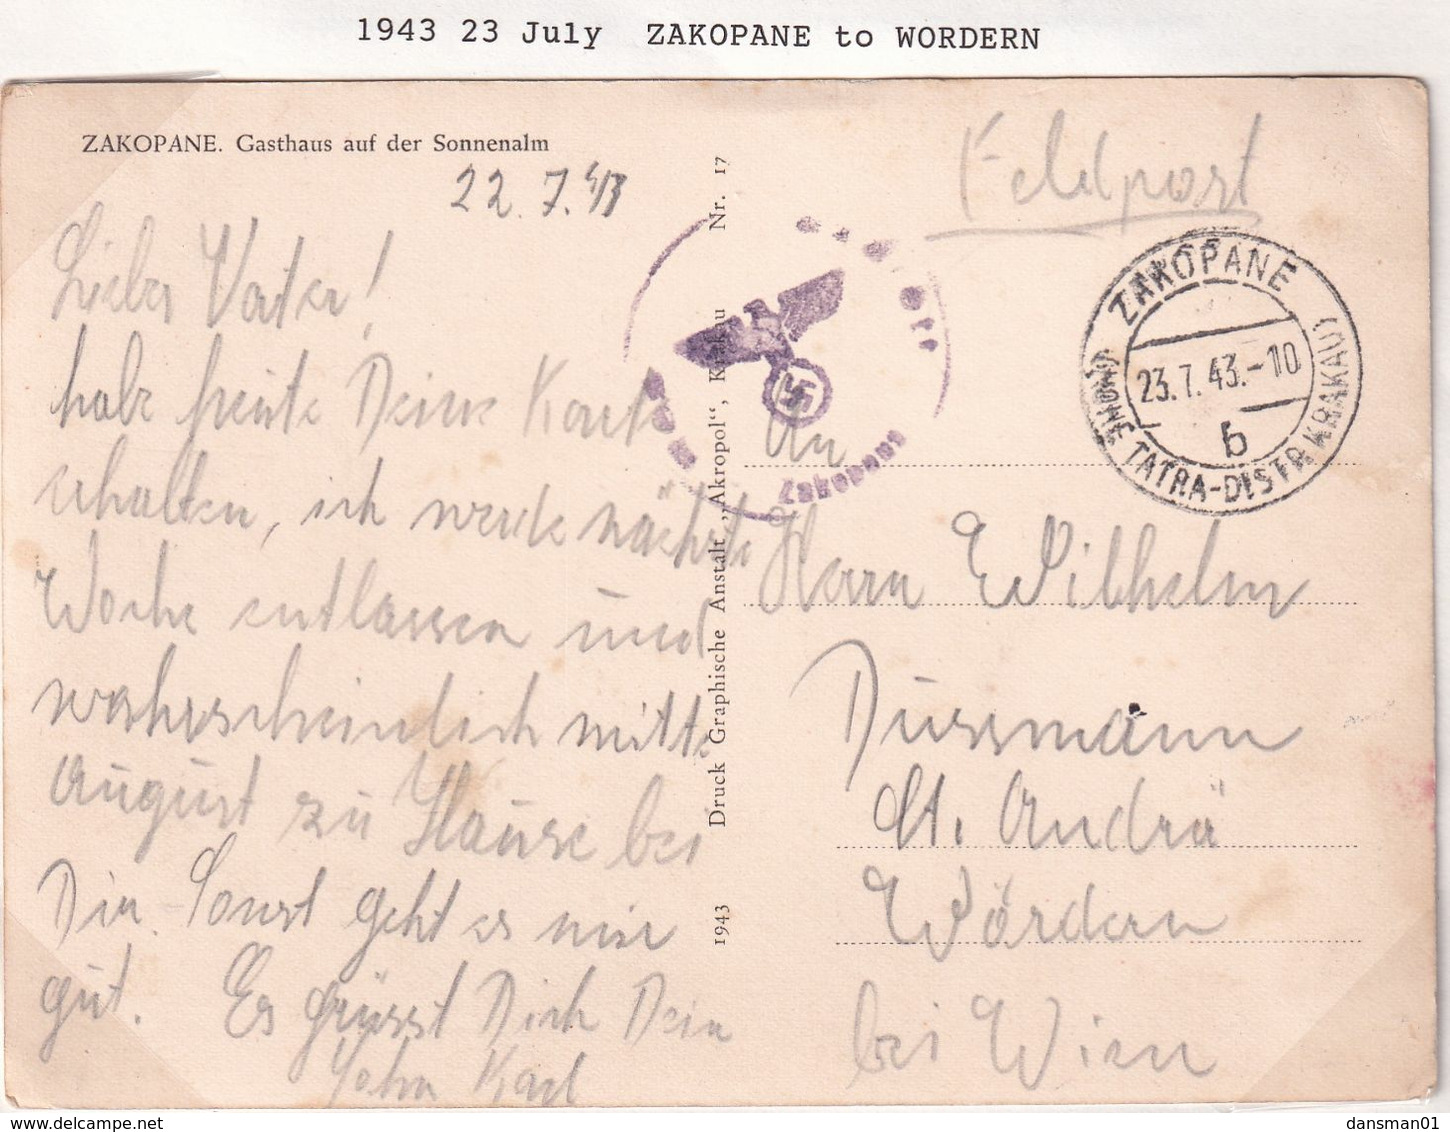 POLAND 1943 Zakopane Fieldpost Postcard - Government In Exile In London